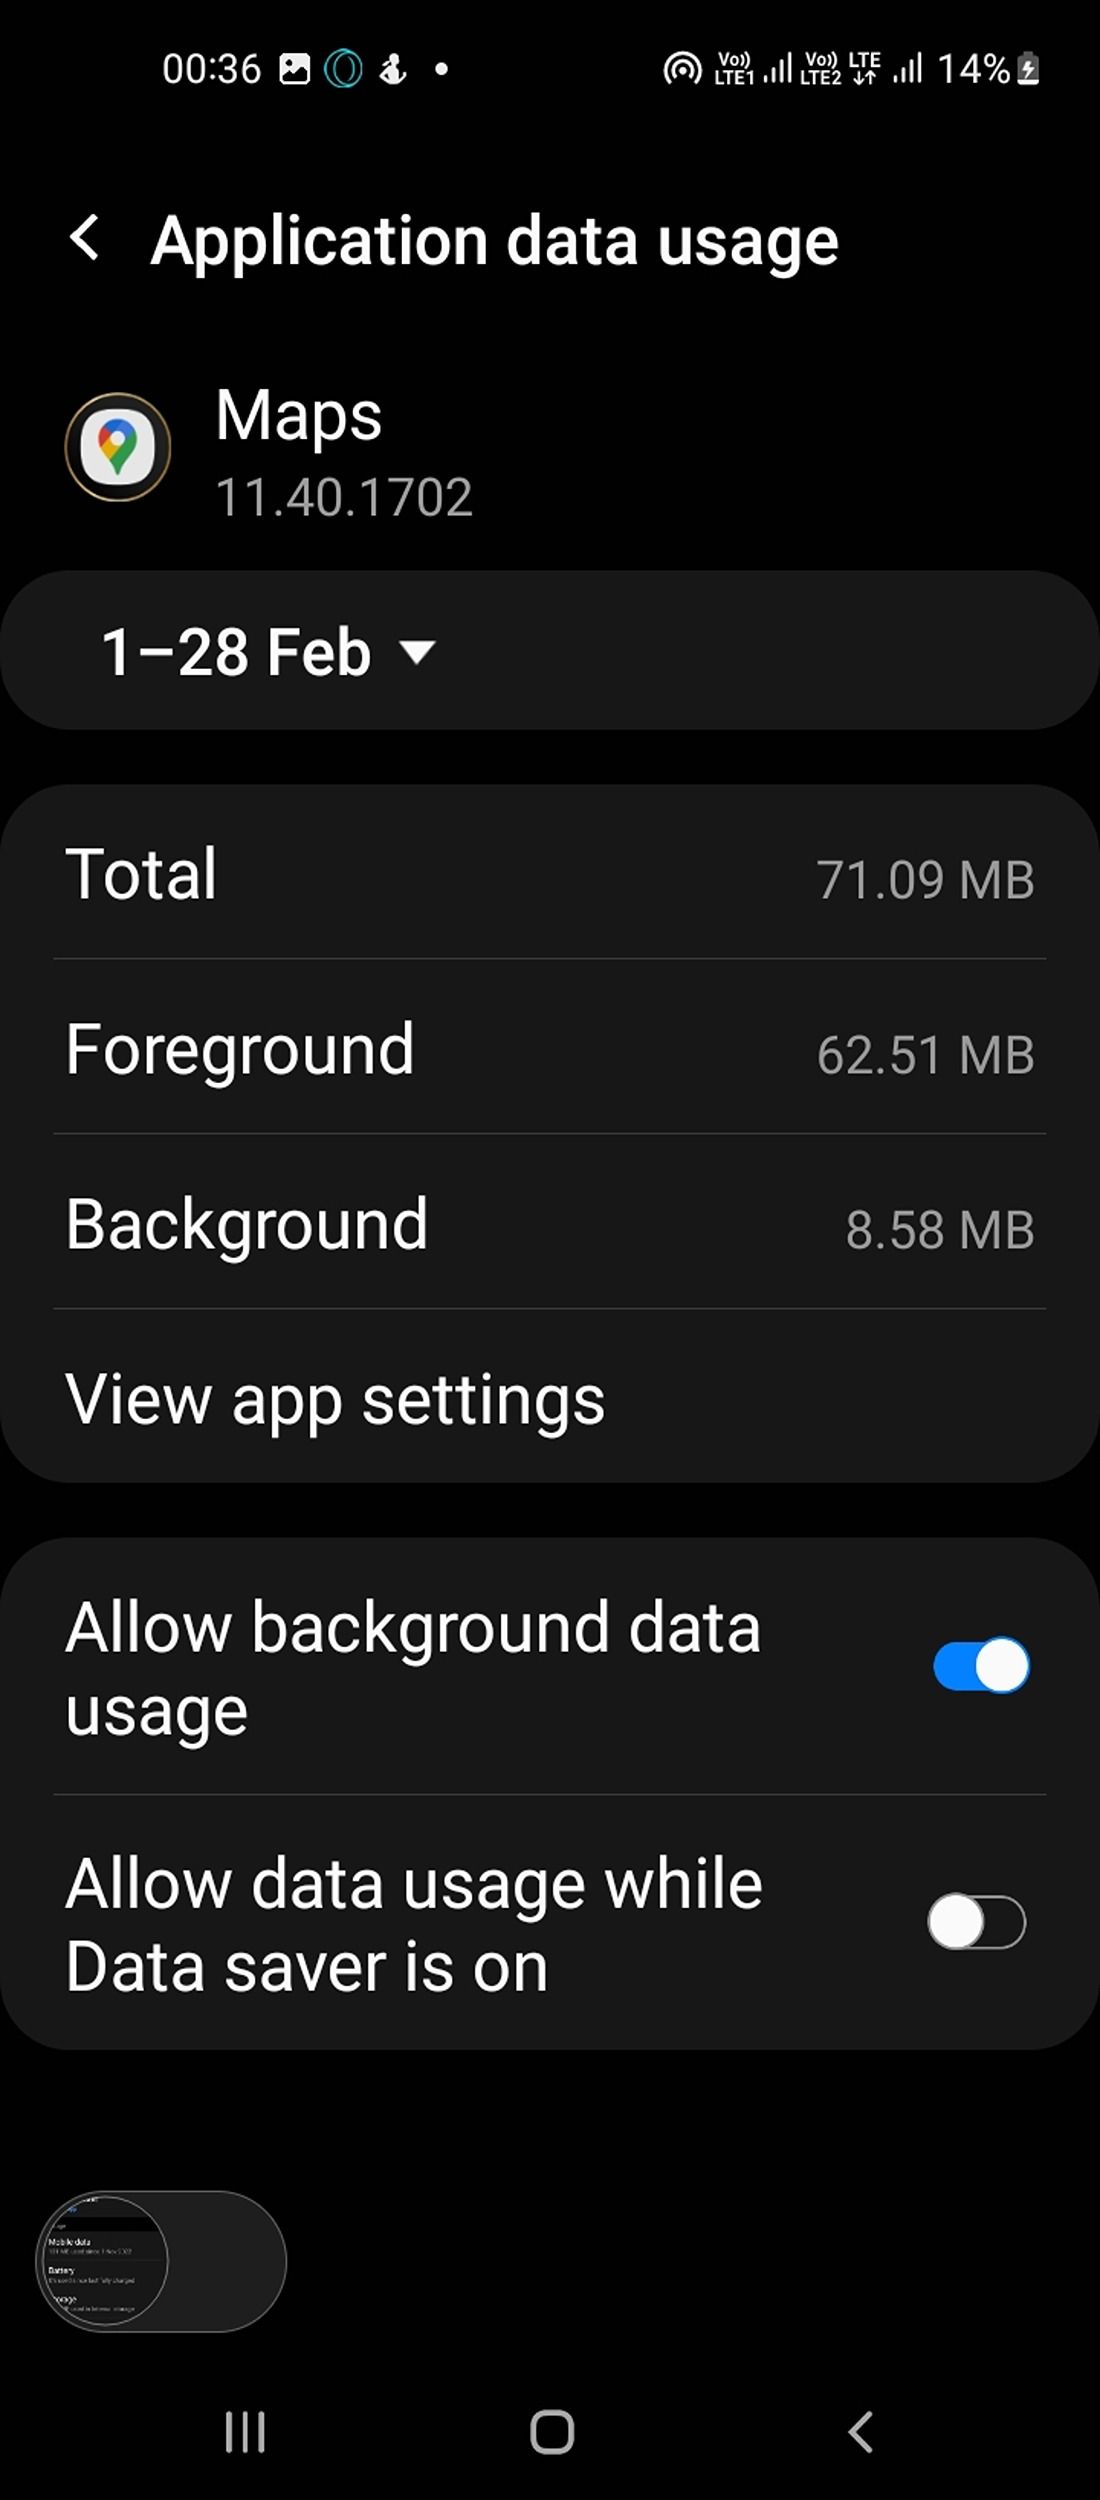 Background data usage settings enabled